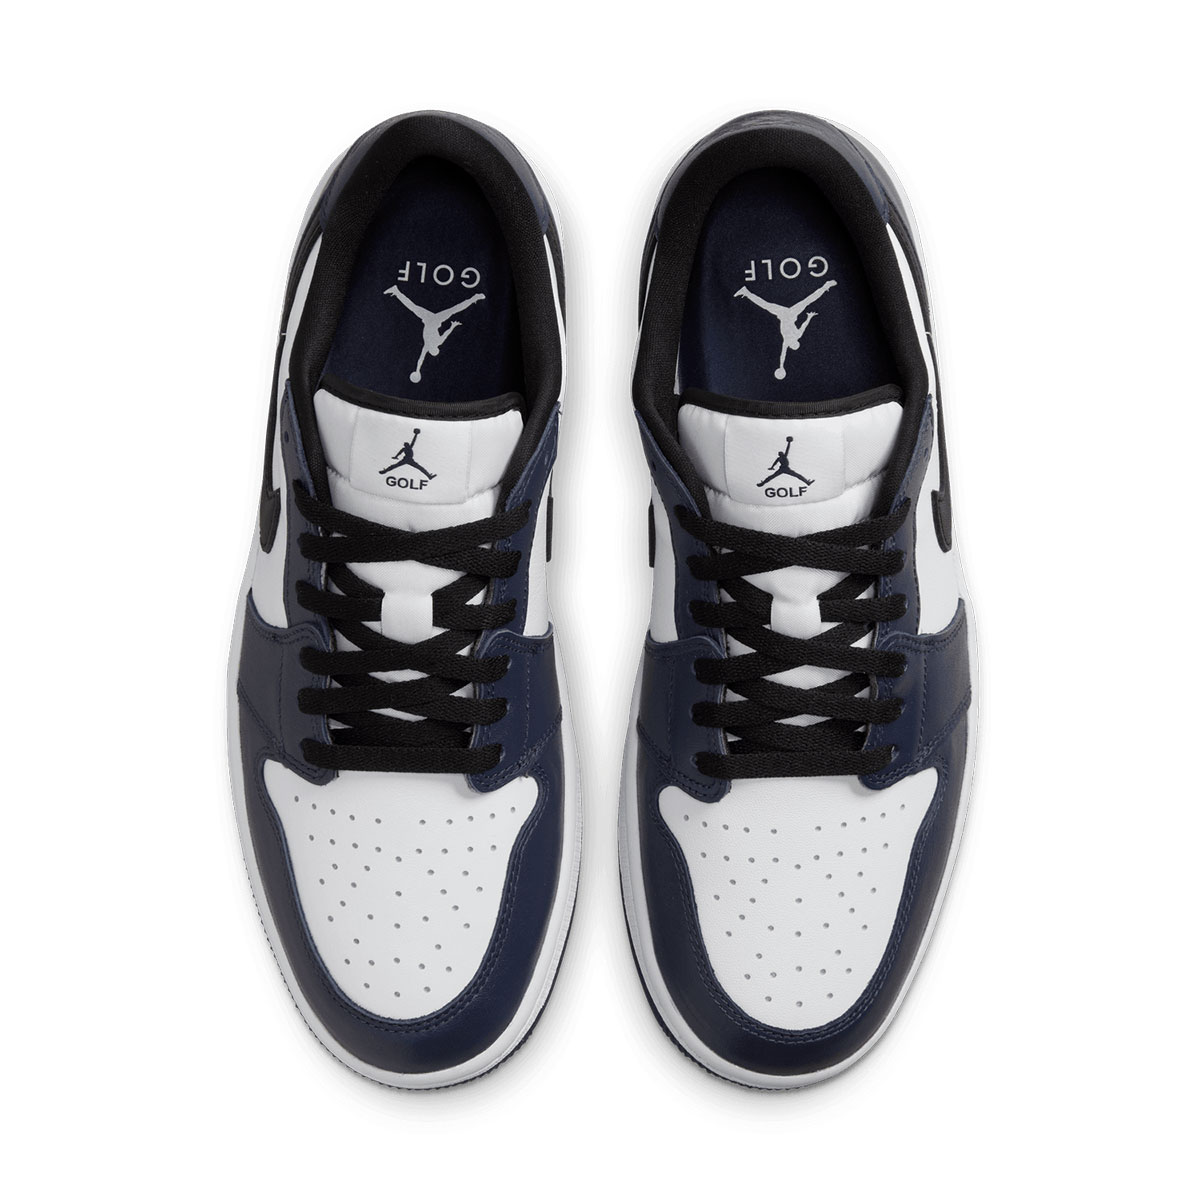 Nike Men's Air Jordan 1 Low G Waterproof Spikeless Golf Shoes from ...